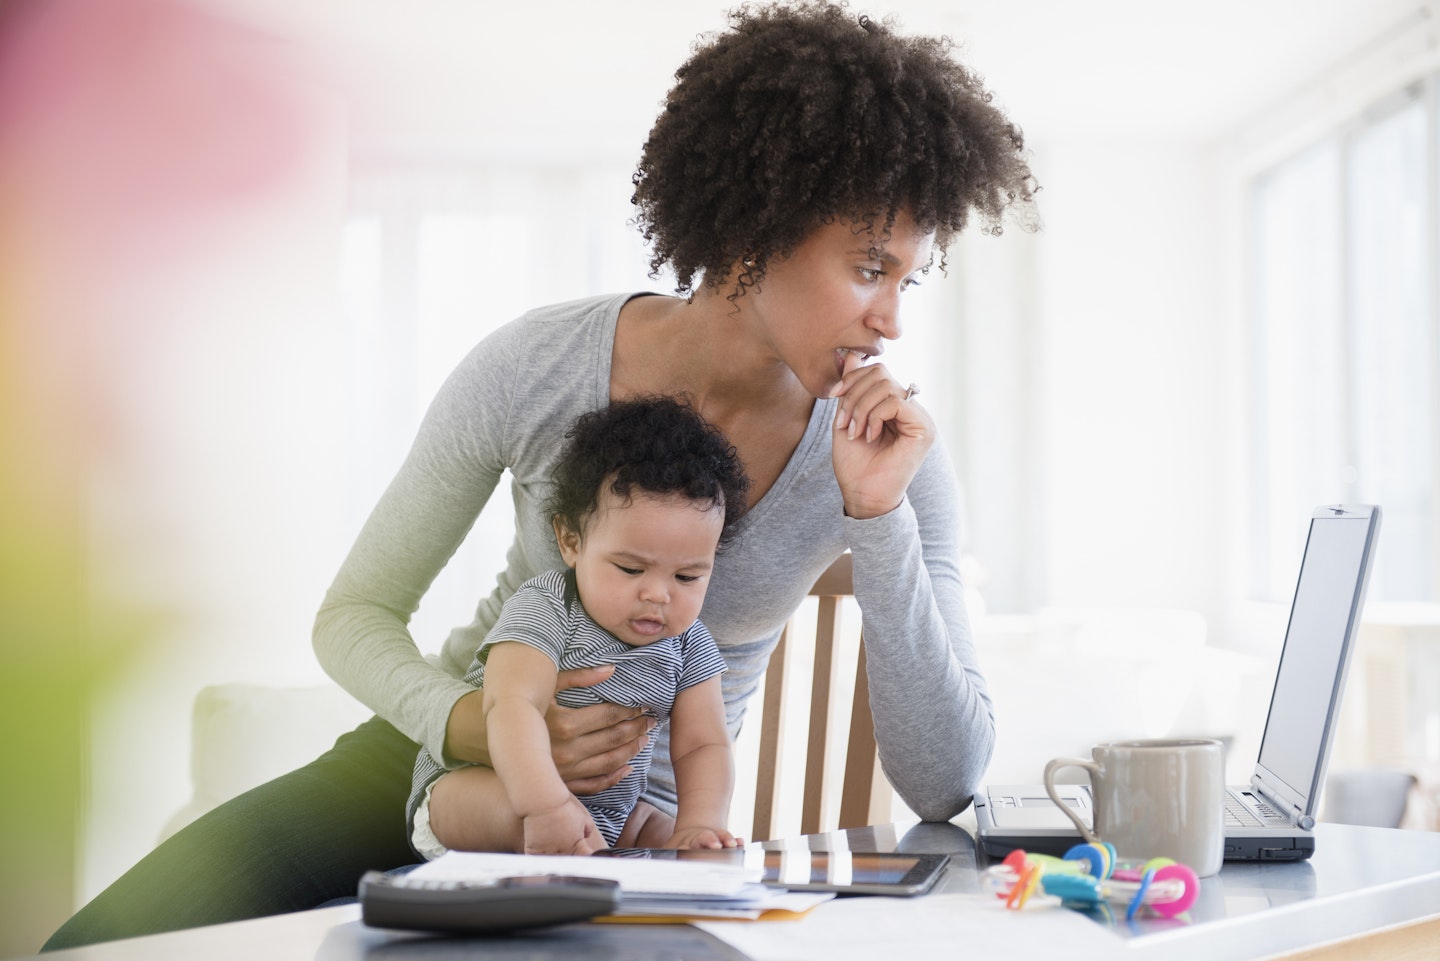 Managing anxiety in motherhood